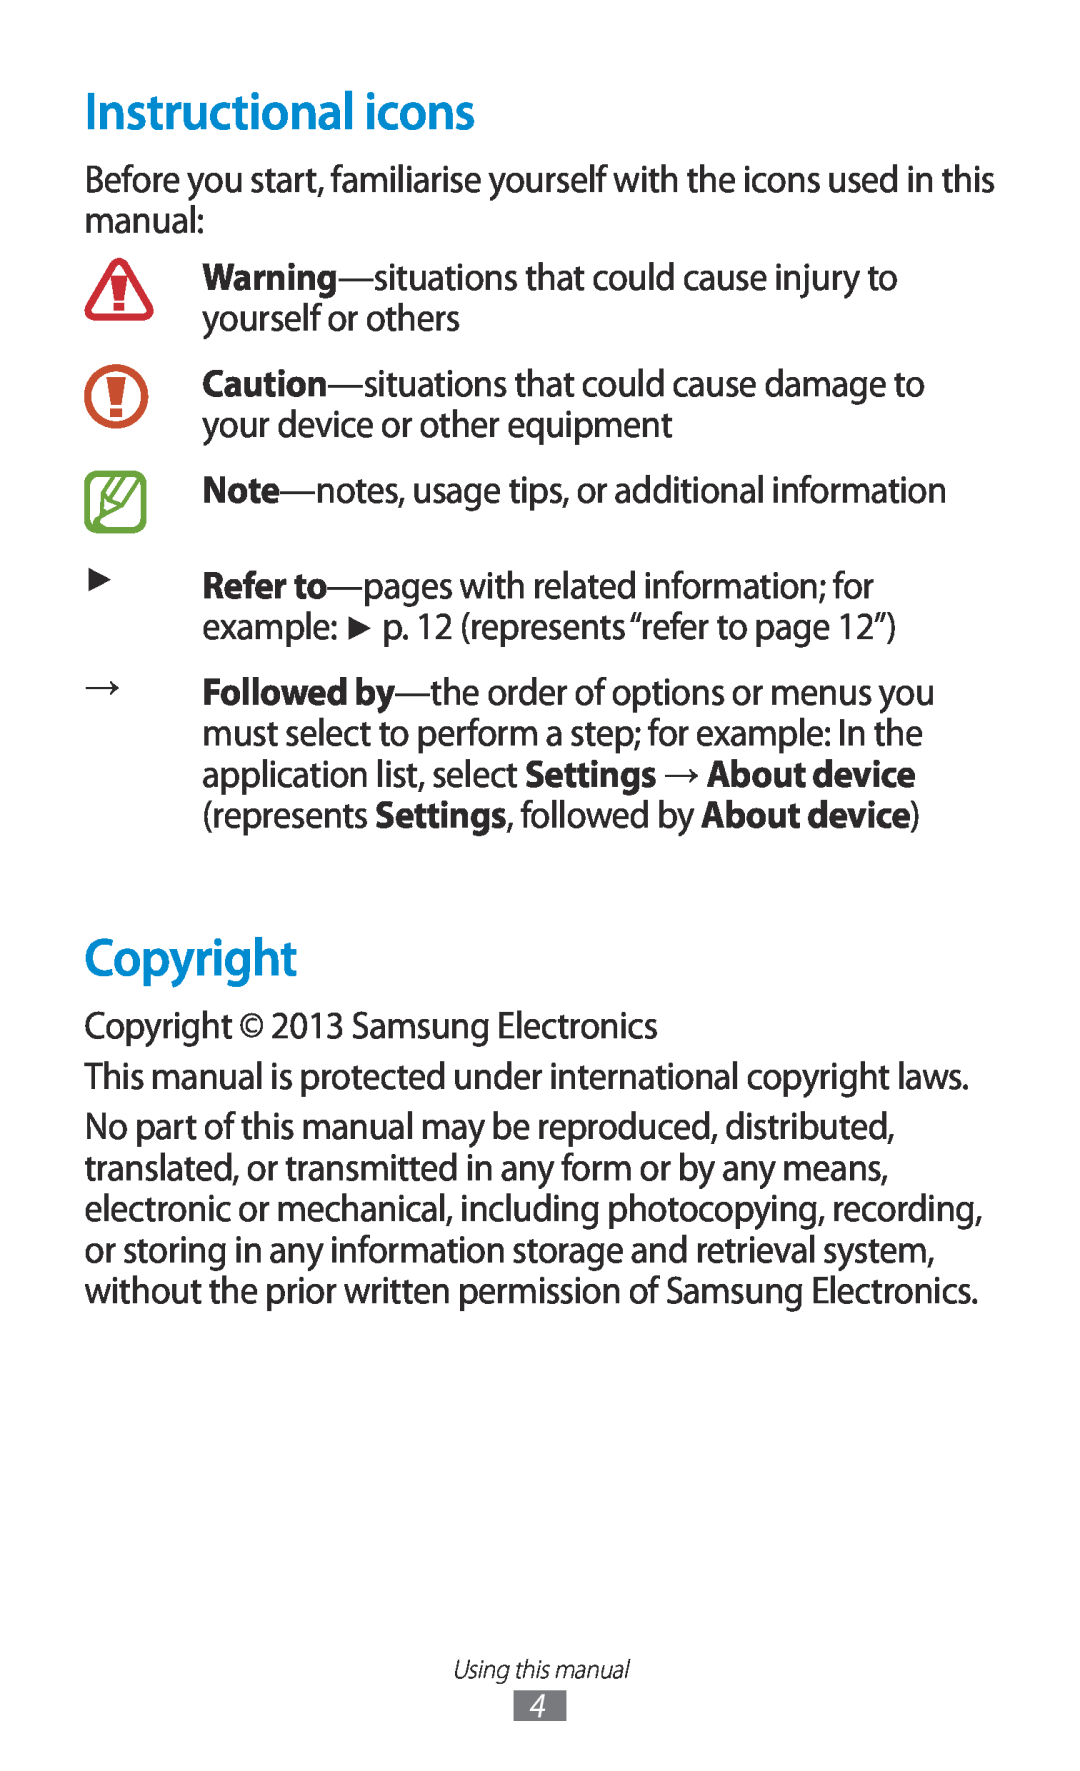 Samsung GT-S7560UWATUR, GT-S7560ZKAVDR, GT-S7560ZKAPRT, GT-S7560UWAWIN, GT-S7560UWAVDR manual Instructional icons, Copyright 